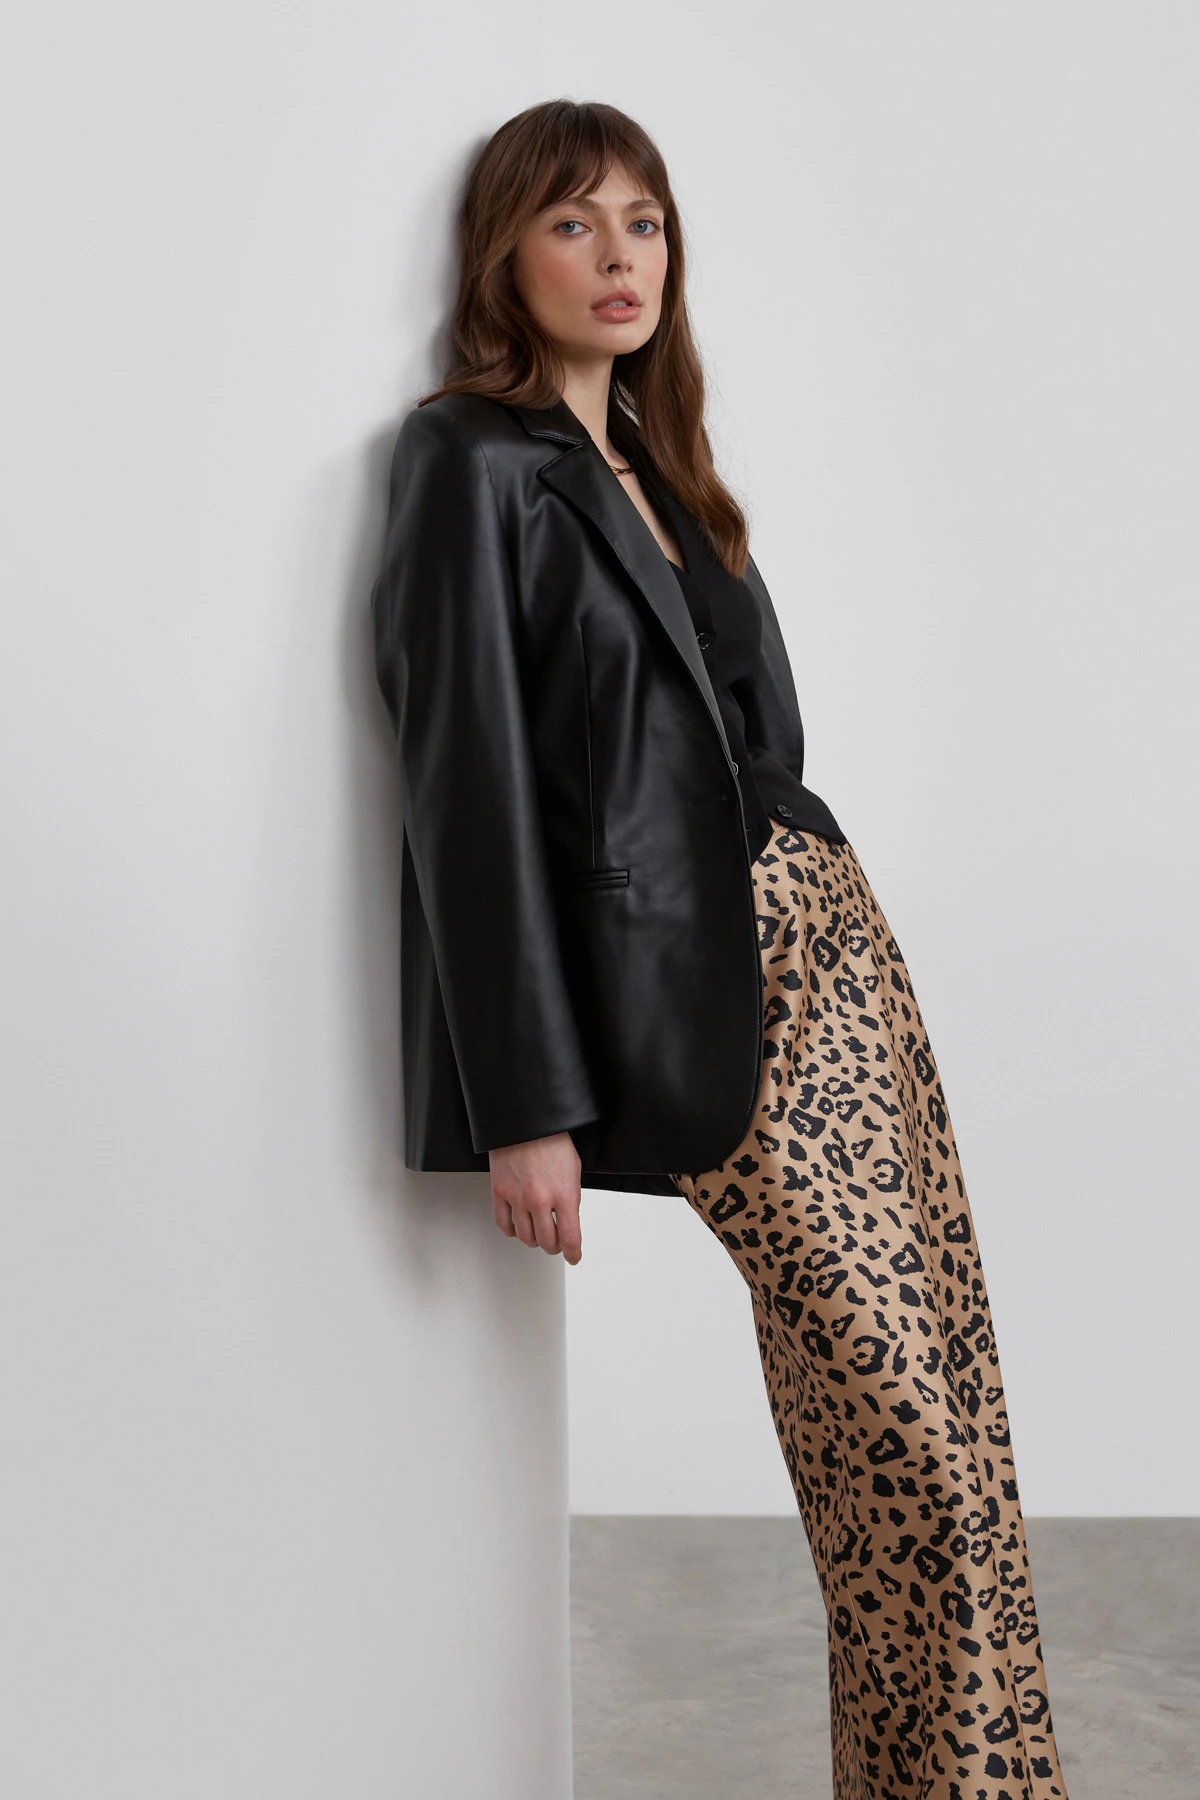 Mid-length satin skirt in leopard print, photo 4